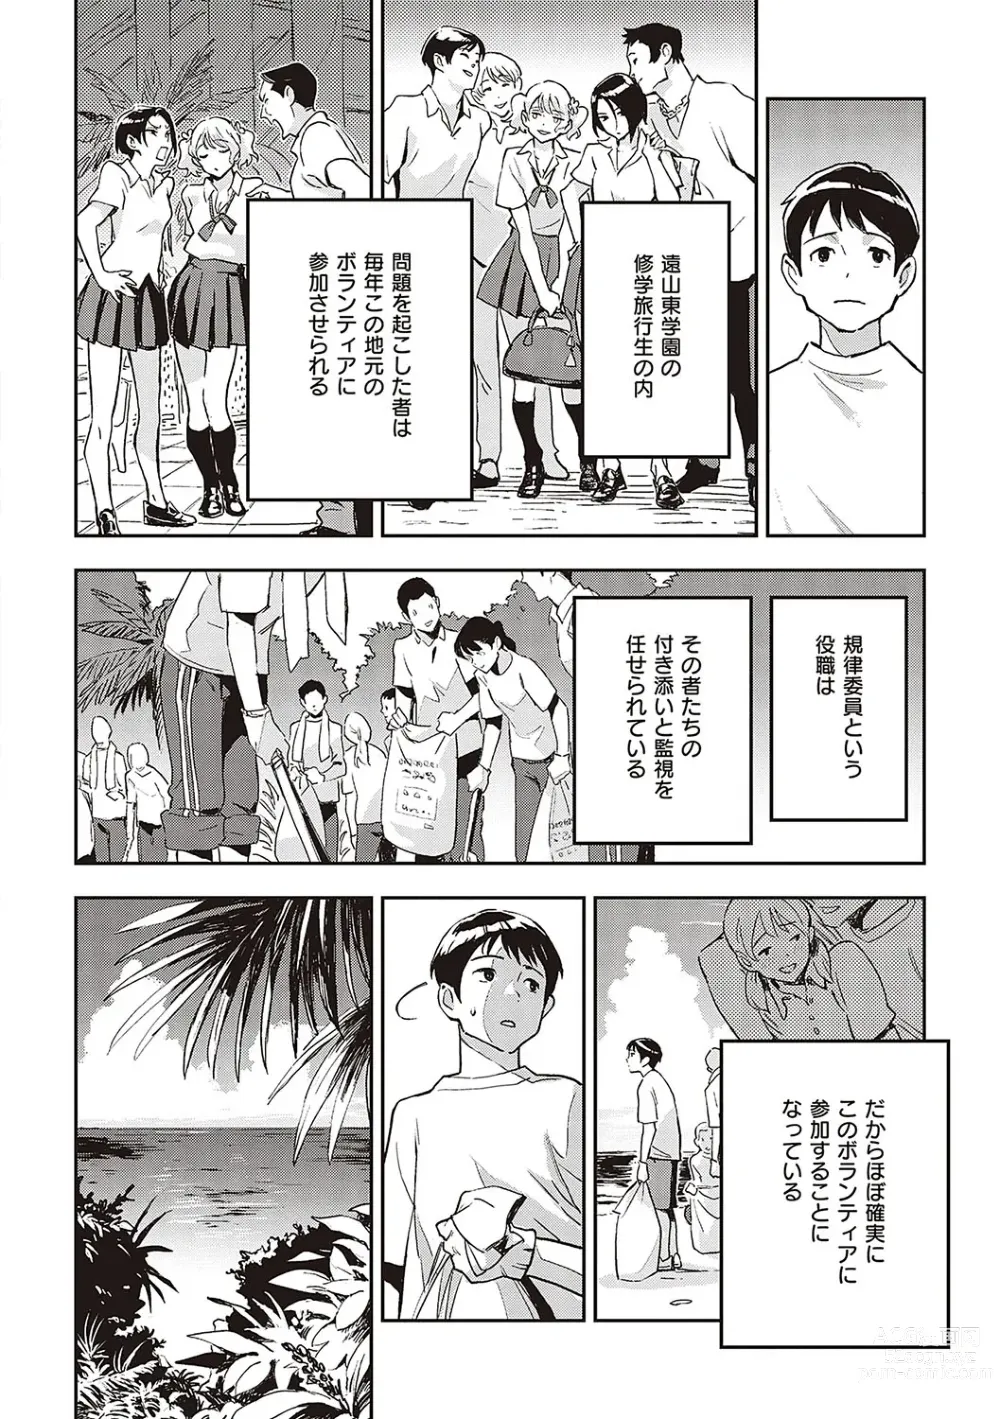 Page 11 of manga Ashu to Resonance - The resonance with subspecies